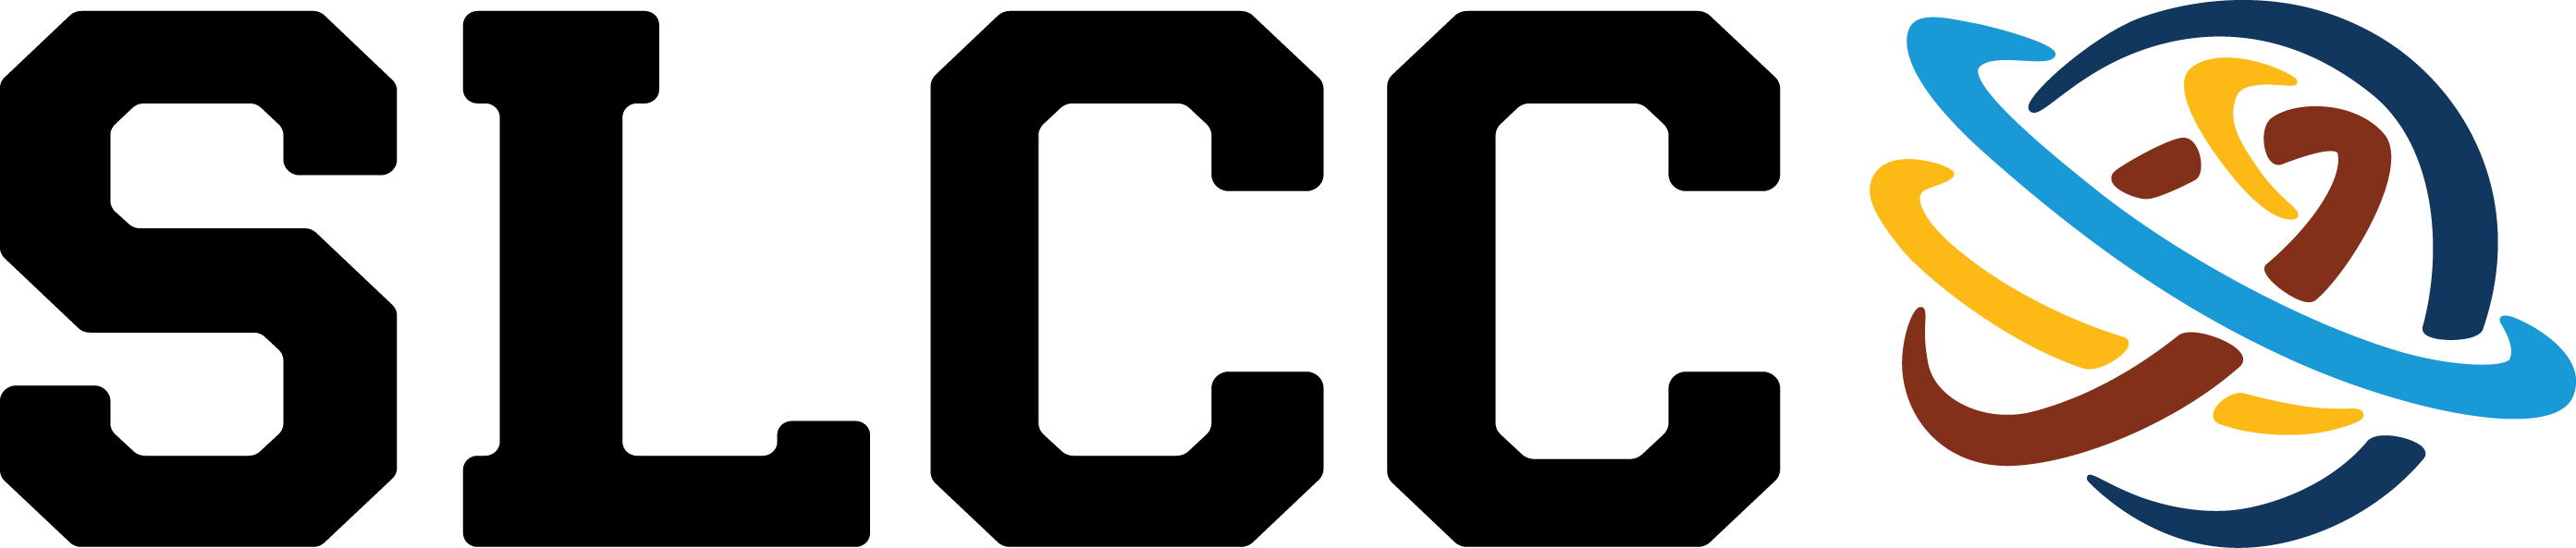 Slcc Logo - Salt Lake Community College (2786x593)